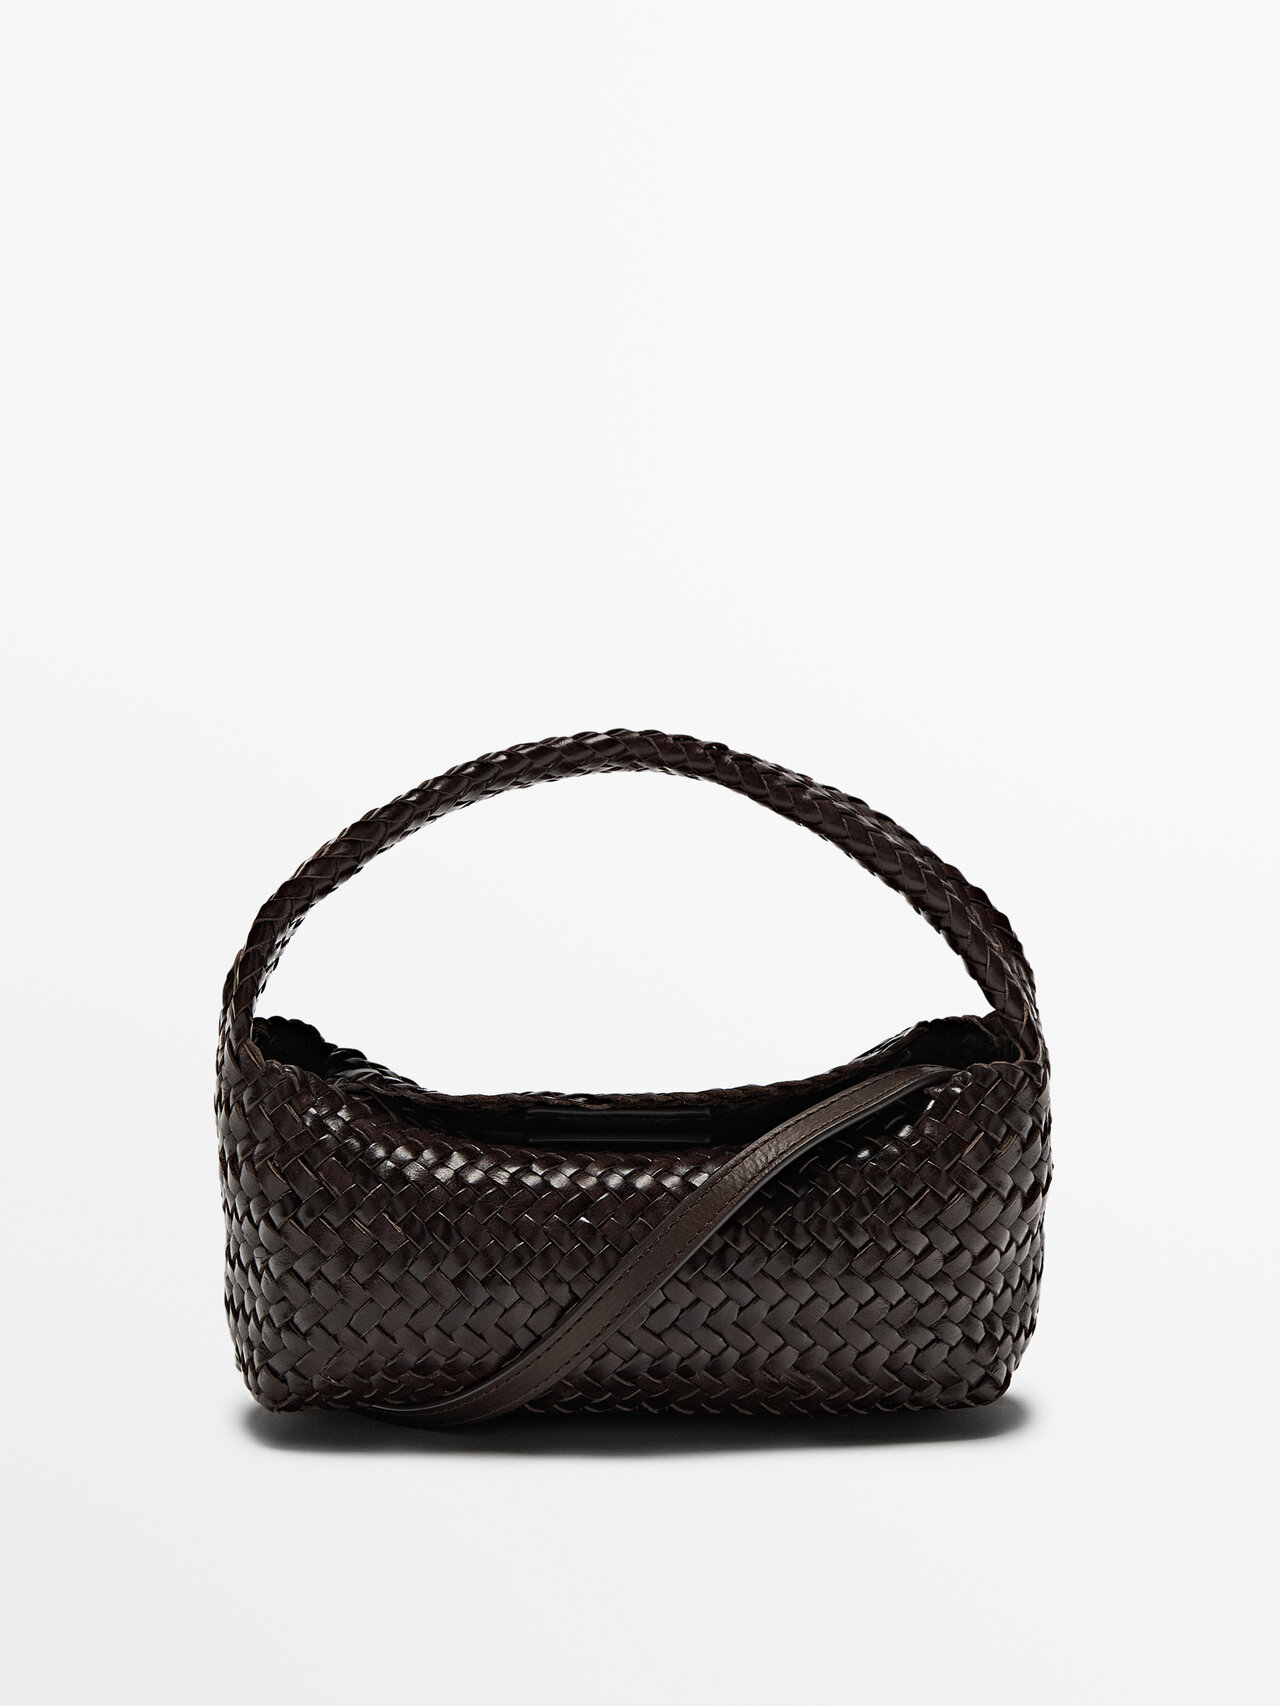 Massimo Dutti Woven Nappa Leather Mini Bag In Brown